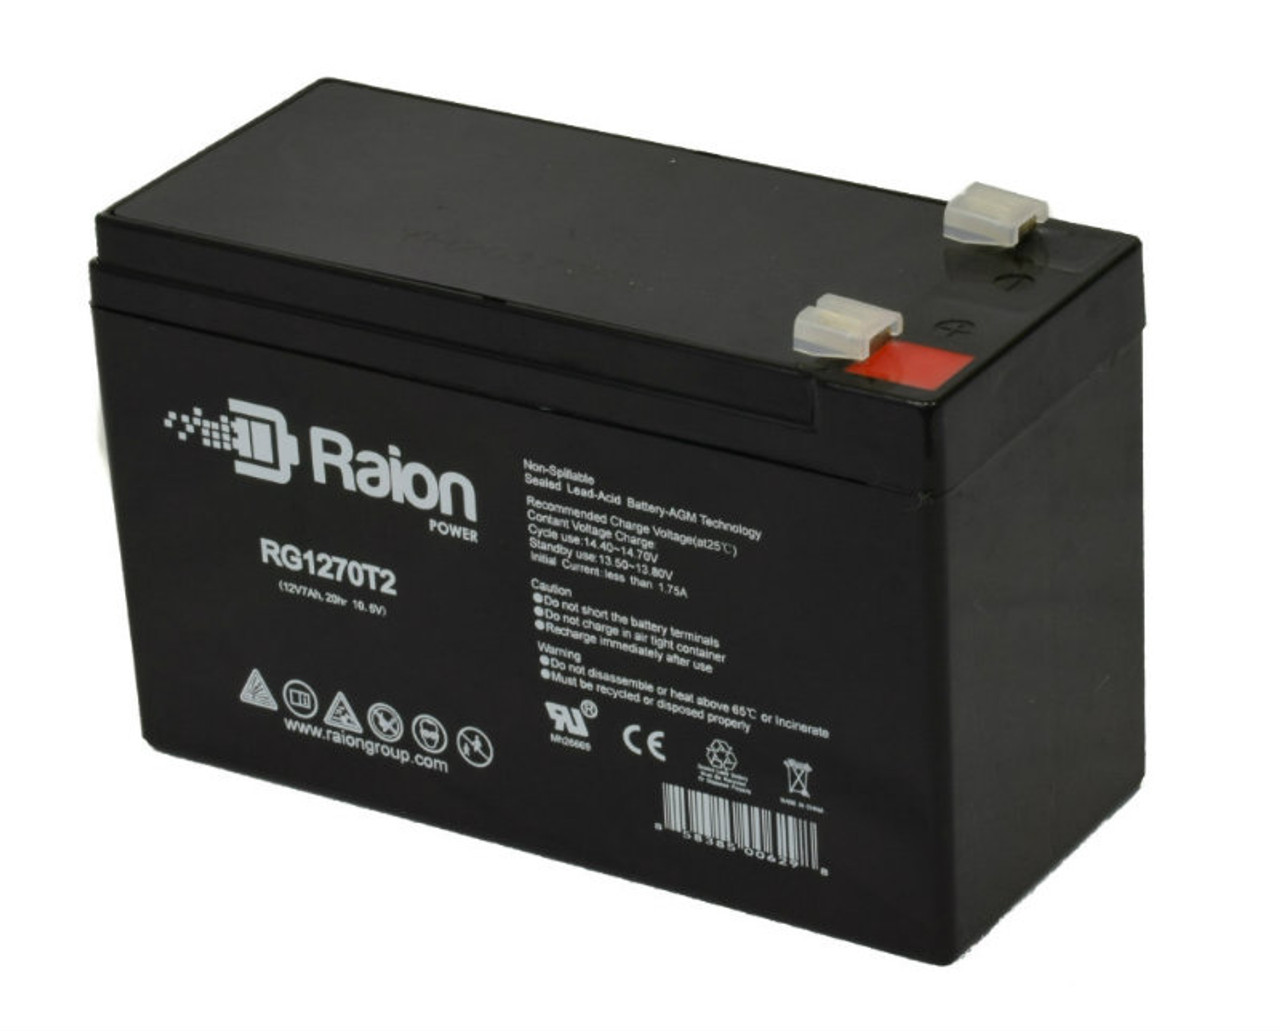 Raion Power Replacement 12V 7Ah RG1270T1 Fire Alarm Battery for Kelvinator Scientific AUDIO ALARM